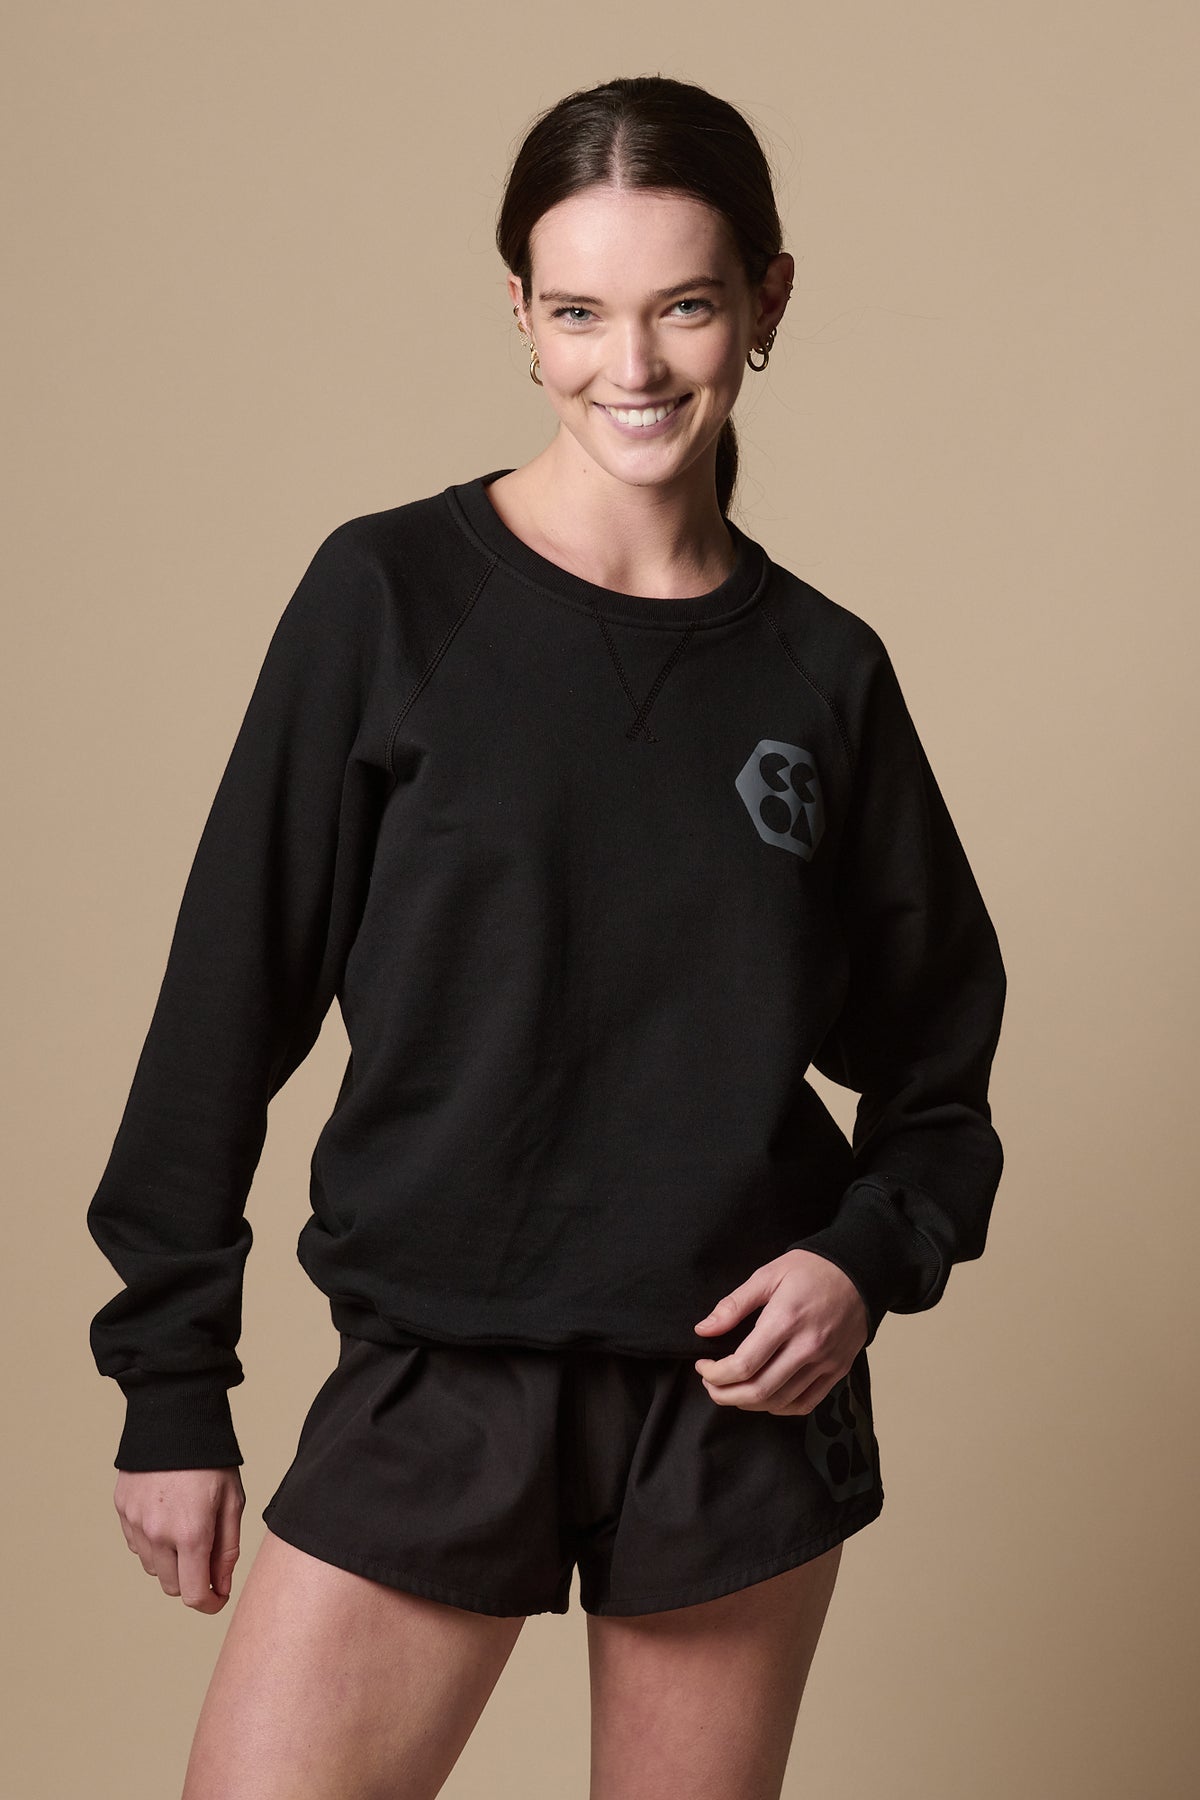 
            Smiley female wearing raglan sweatshirt in black with CCOA logo